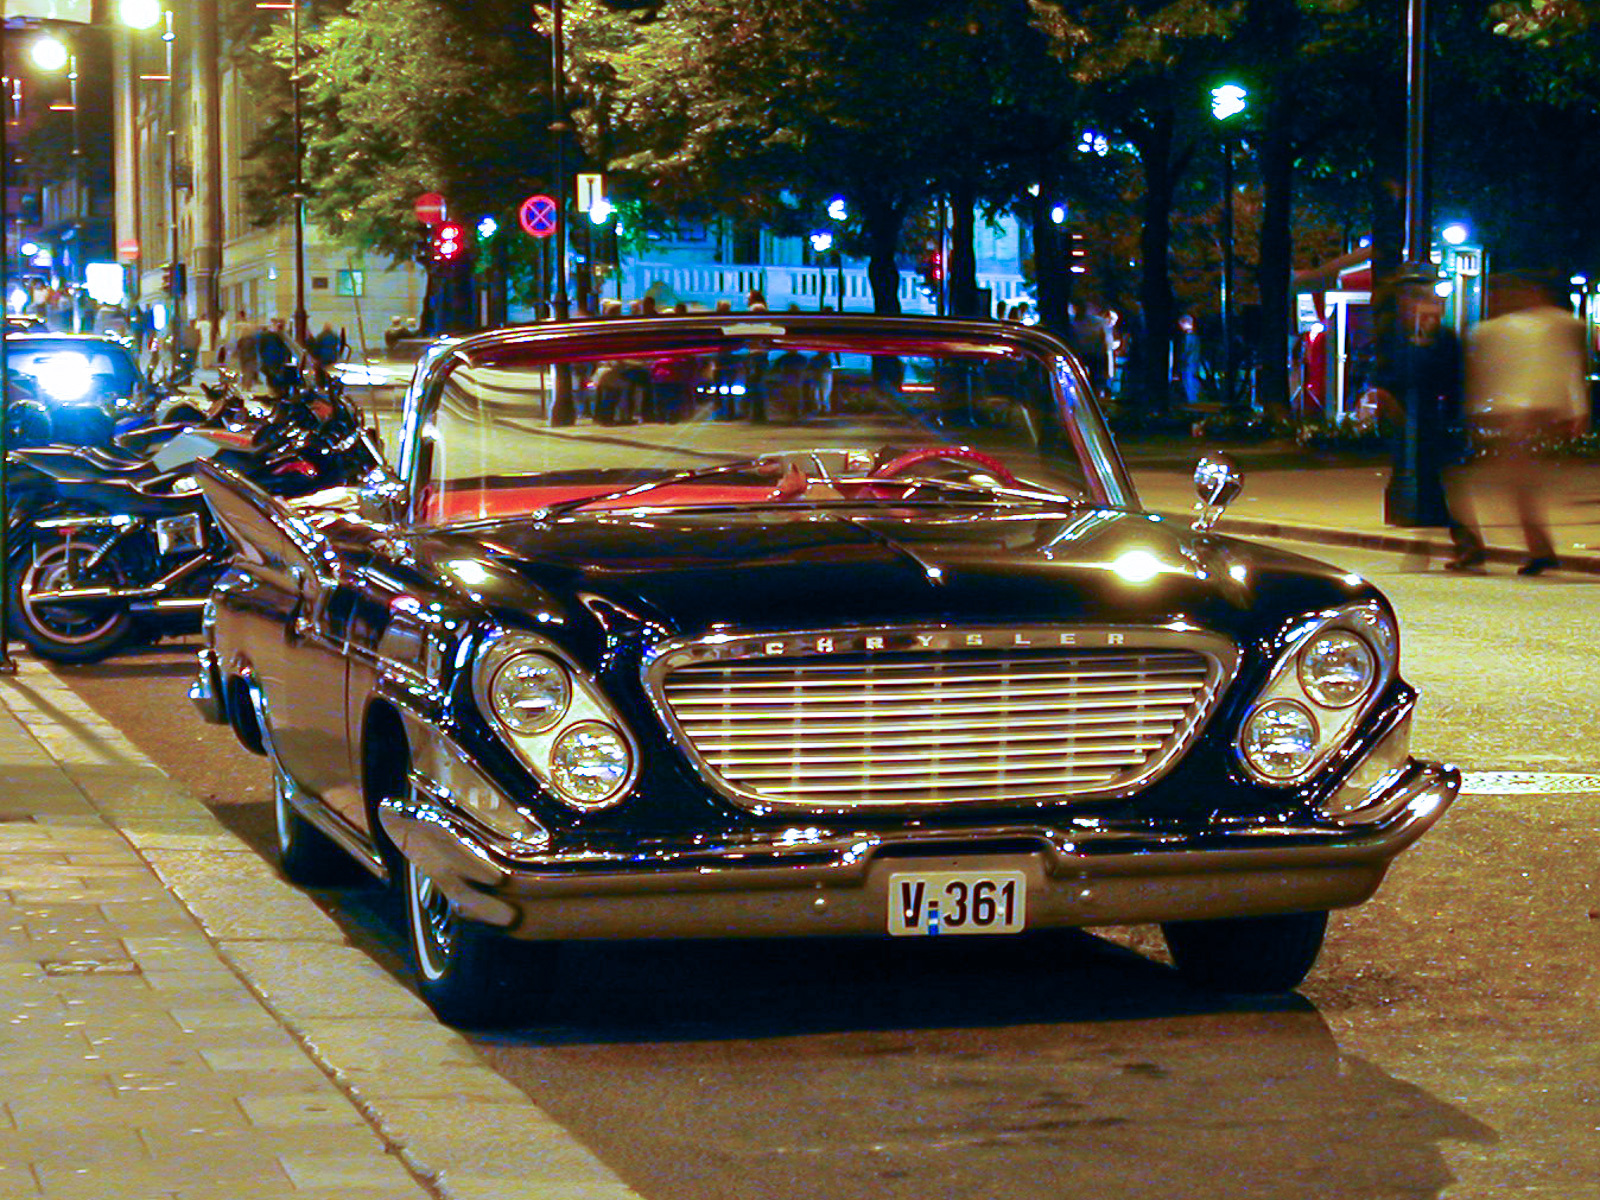 013-1961 Chrysler Newport Convertible 07. Eier- me